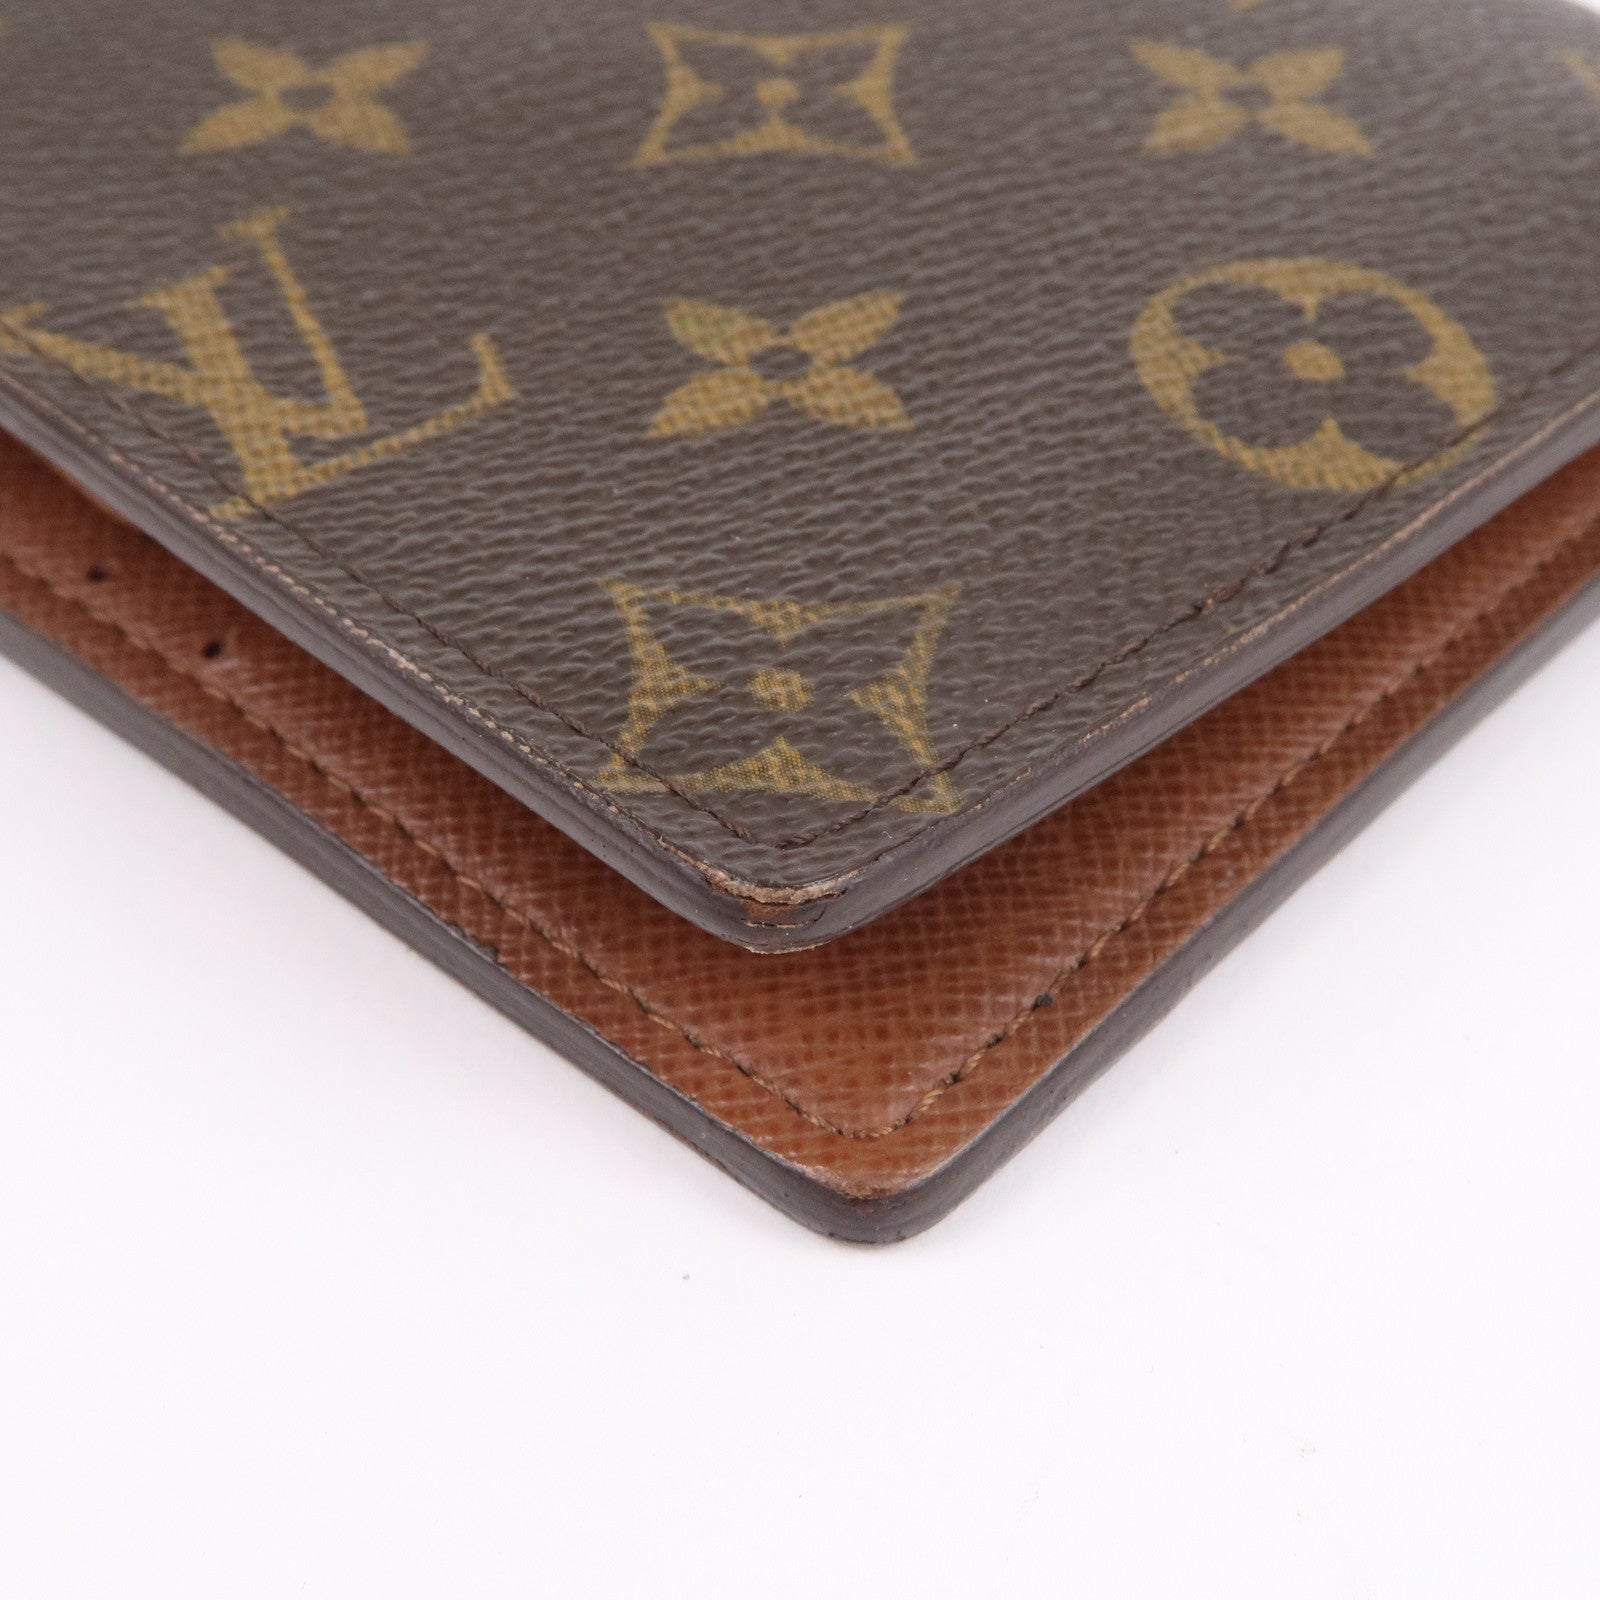 Louis-Vuitton-Monogram-Portefeuille-Marco-Bifold-Wallet-M61675 –  dct-ep_vintage luxury Store